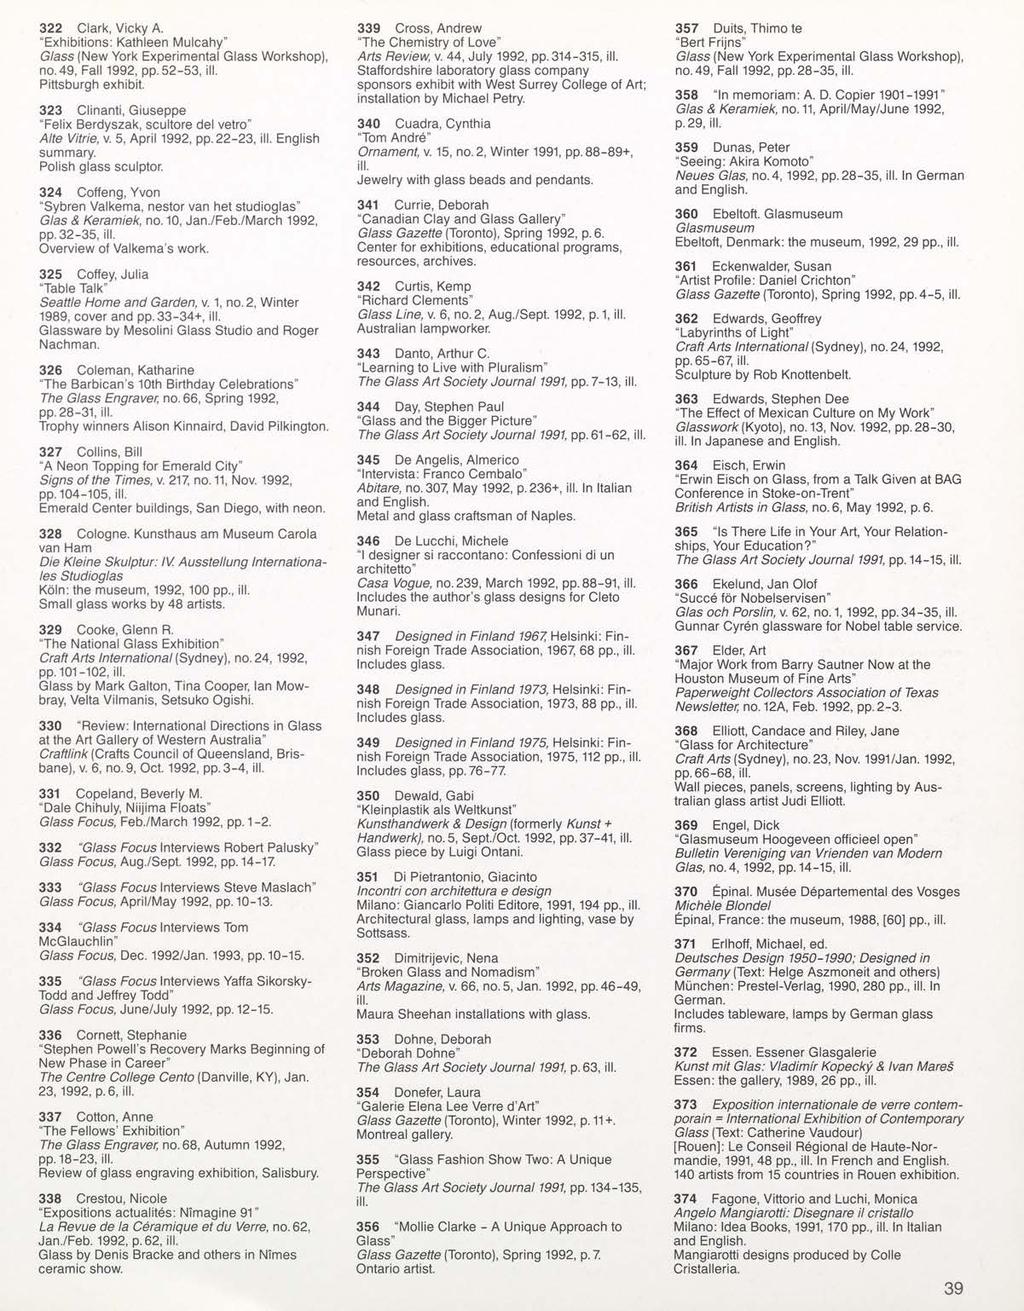 322 Clark, Vicky A. "Exhibitions: Kathleen Mulcahy" no. 49, Fall 1992, pp. 52-53, Pittsburgh exhibit. 323 Clinanti, Giuseppe "Felix Berdyszak, scultore del vetro" Alte Vitrie, v. 5, April 1992, pp.